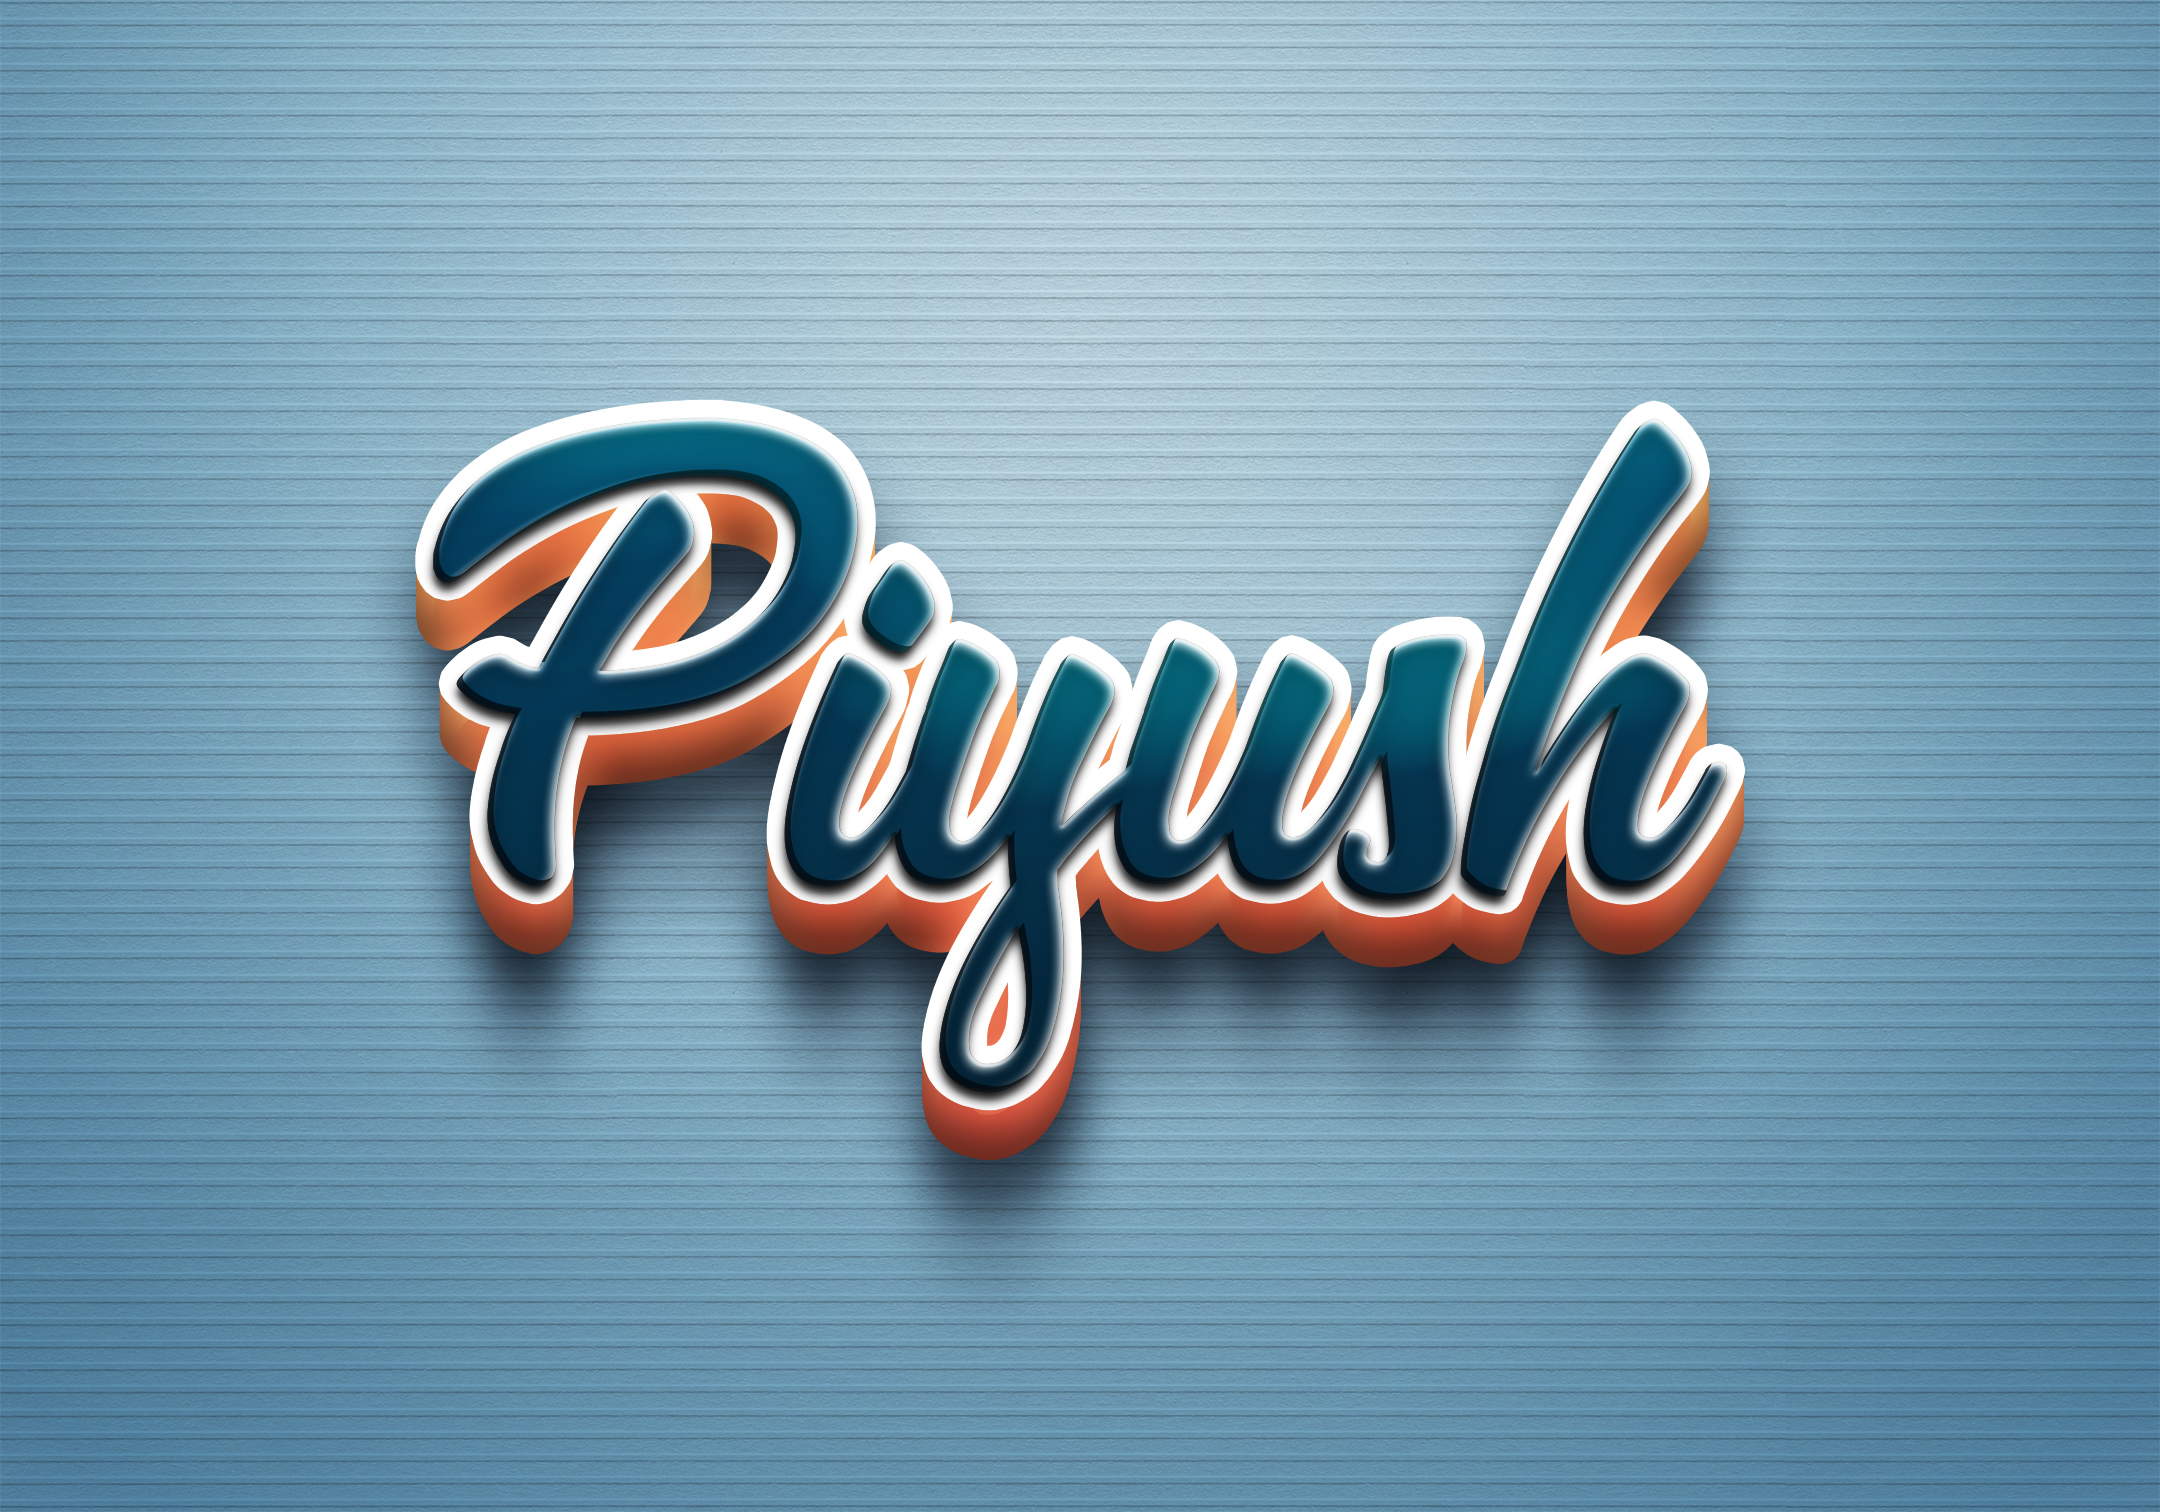 Creative Piyush Drink Piyush Sticker Vector Stock Vector (Royalty Free)  2216017381 | Shutterstock